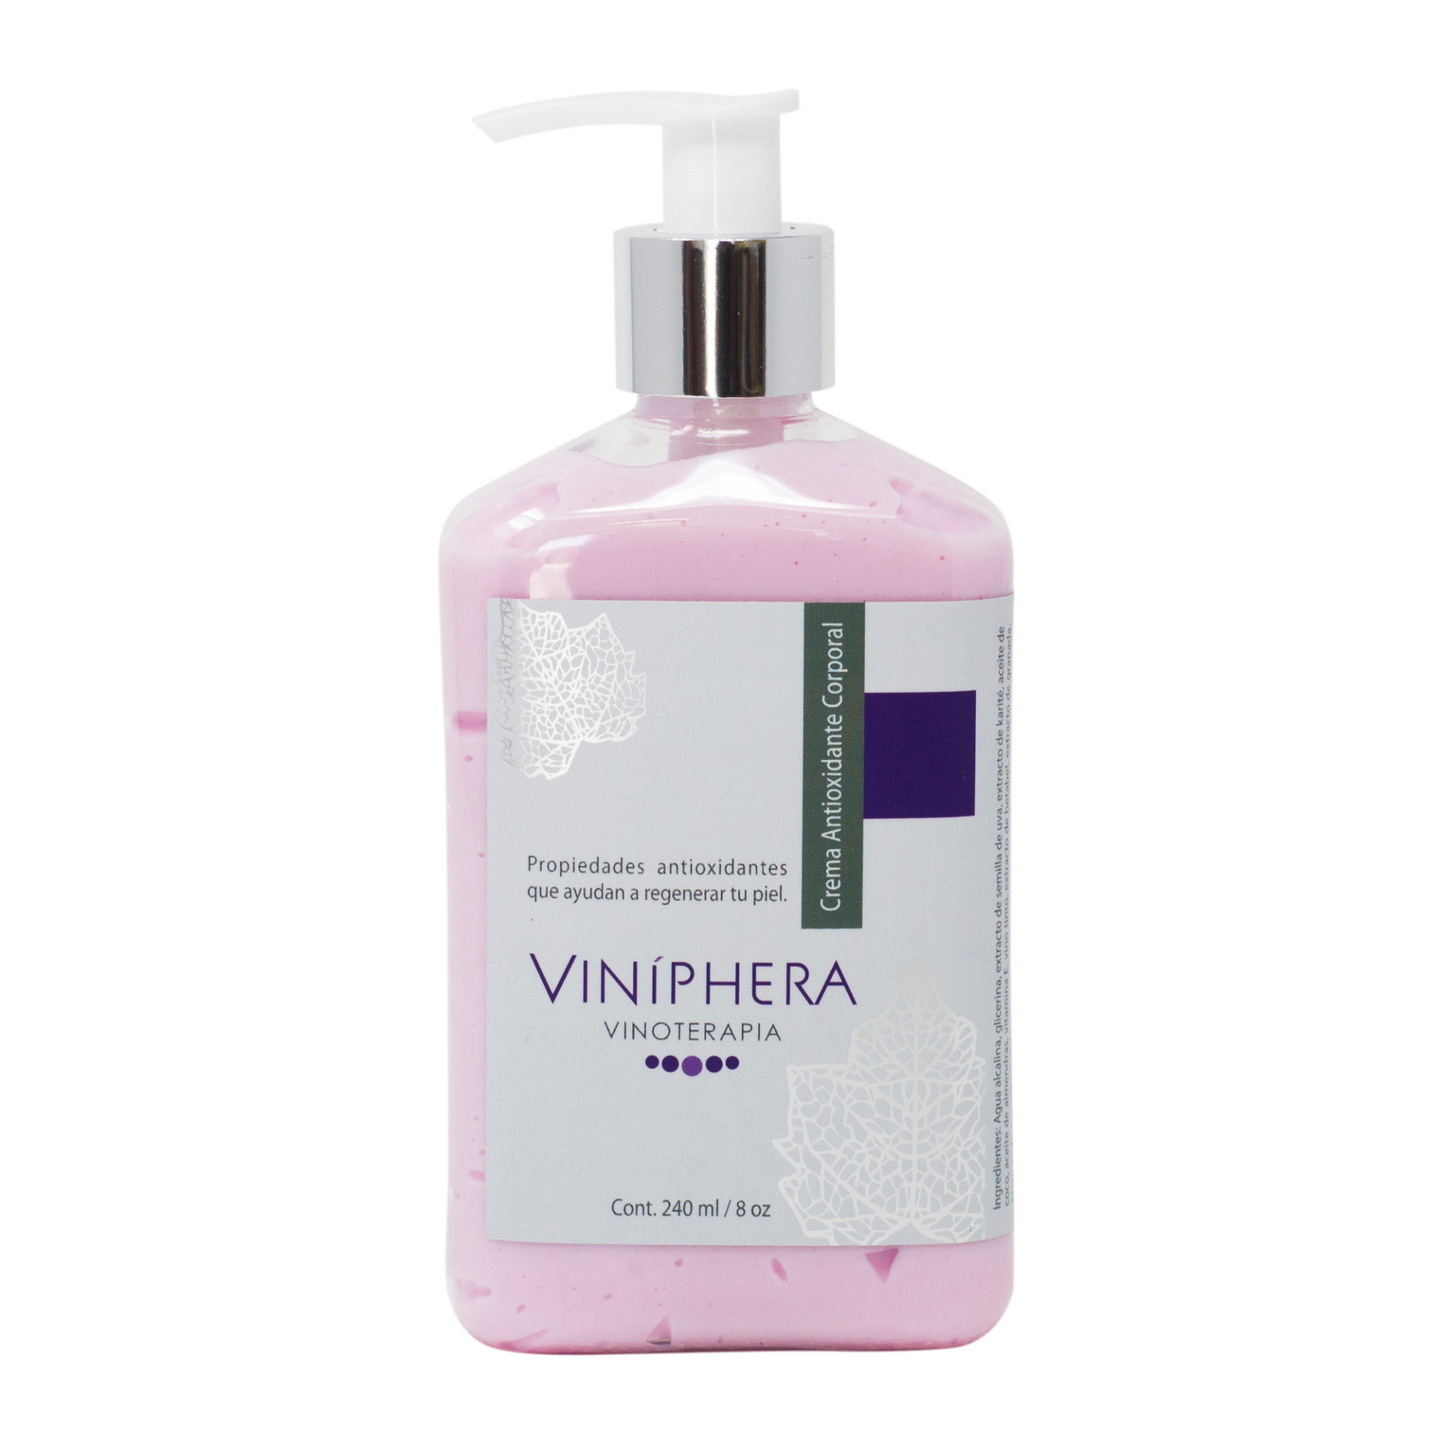 Viniphera- Crema corporal antioxidante Vinoterapia